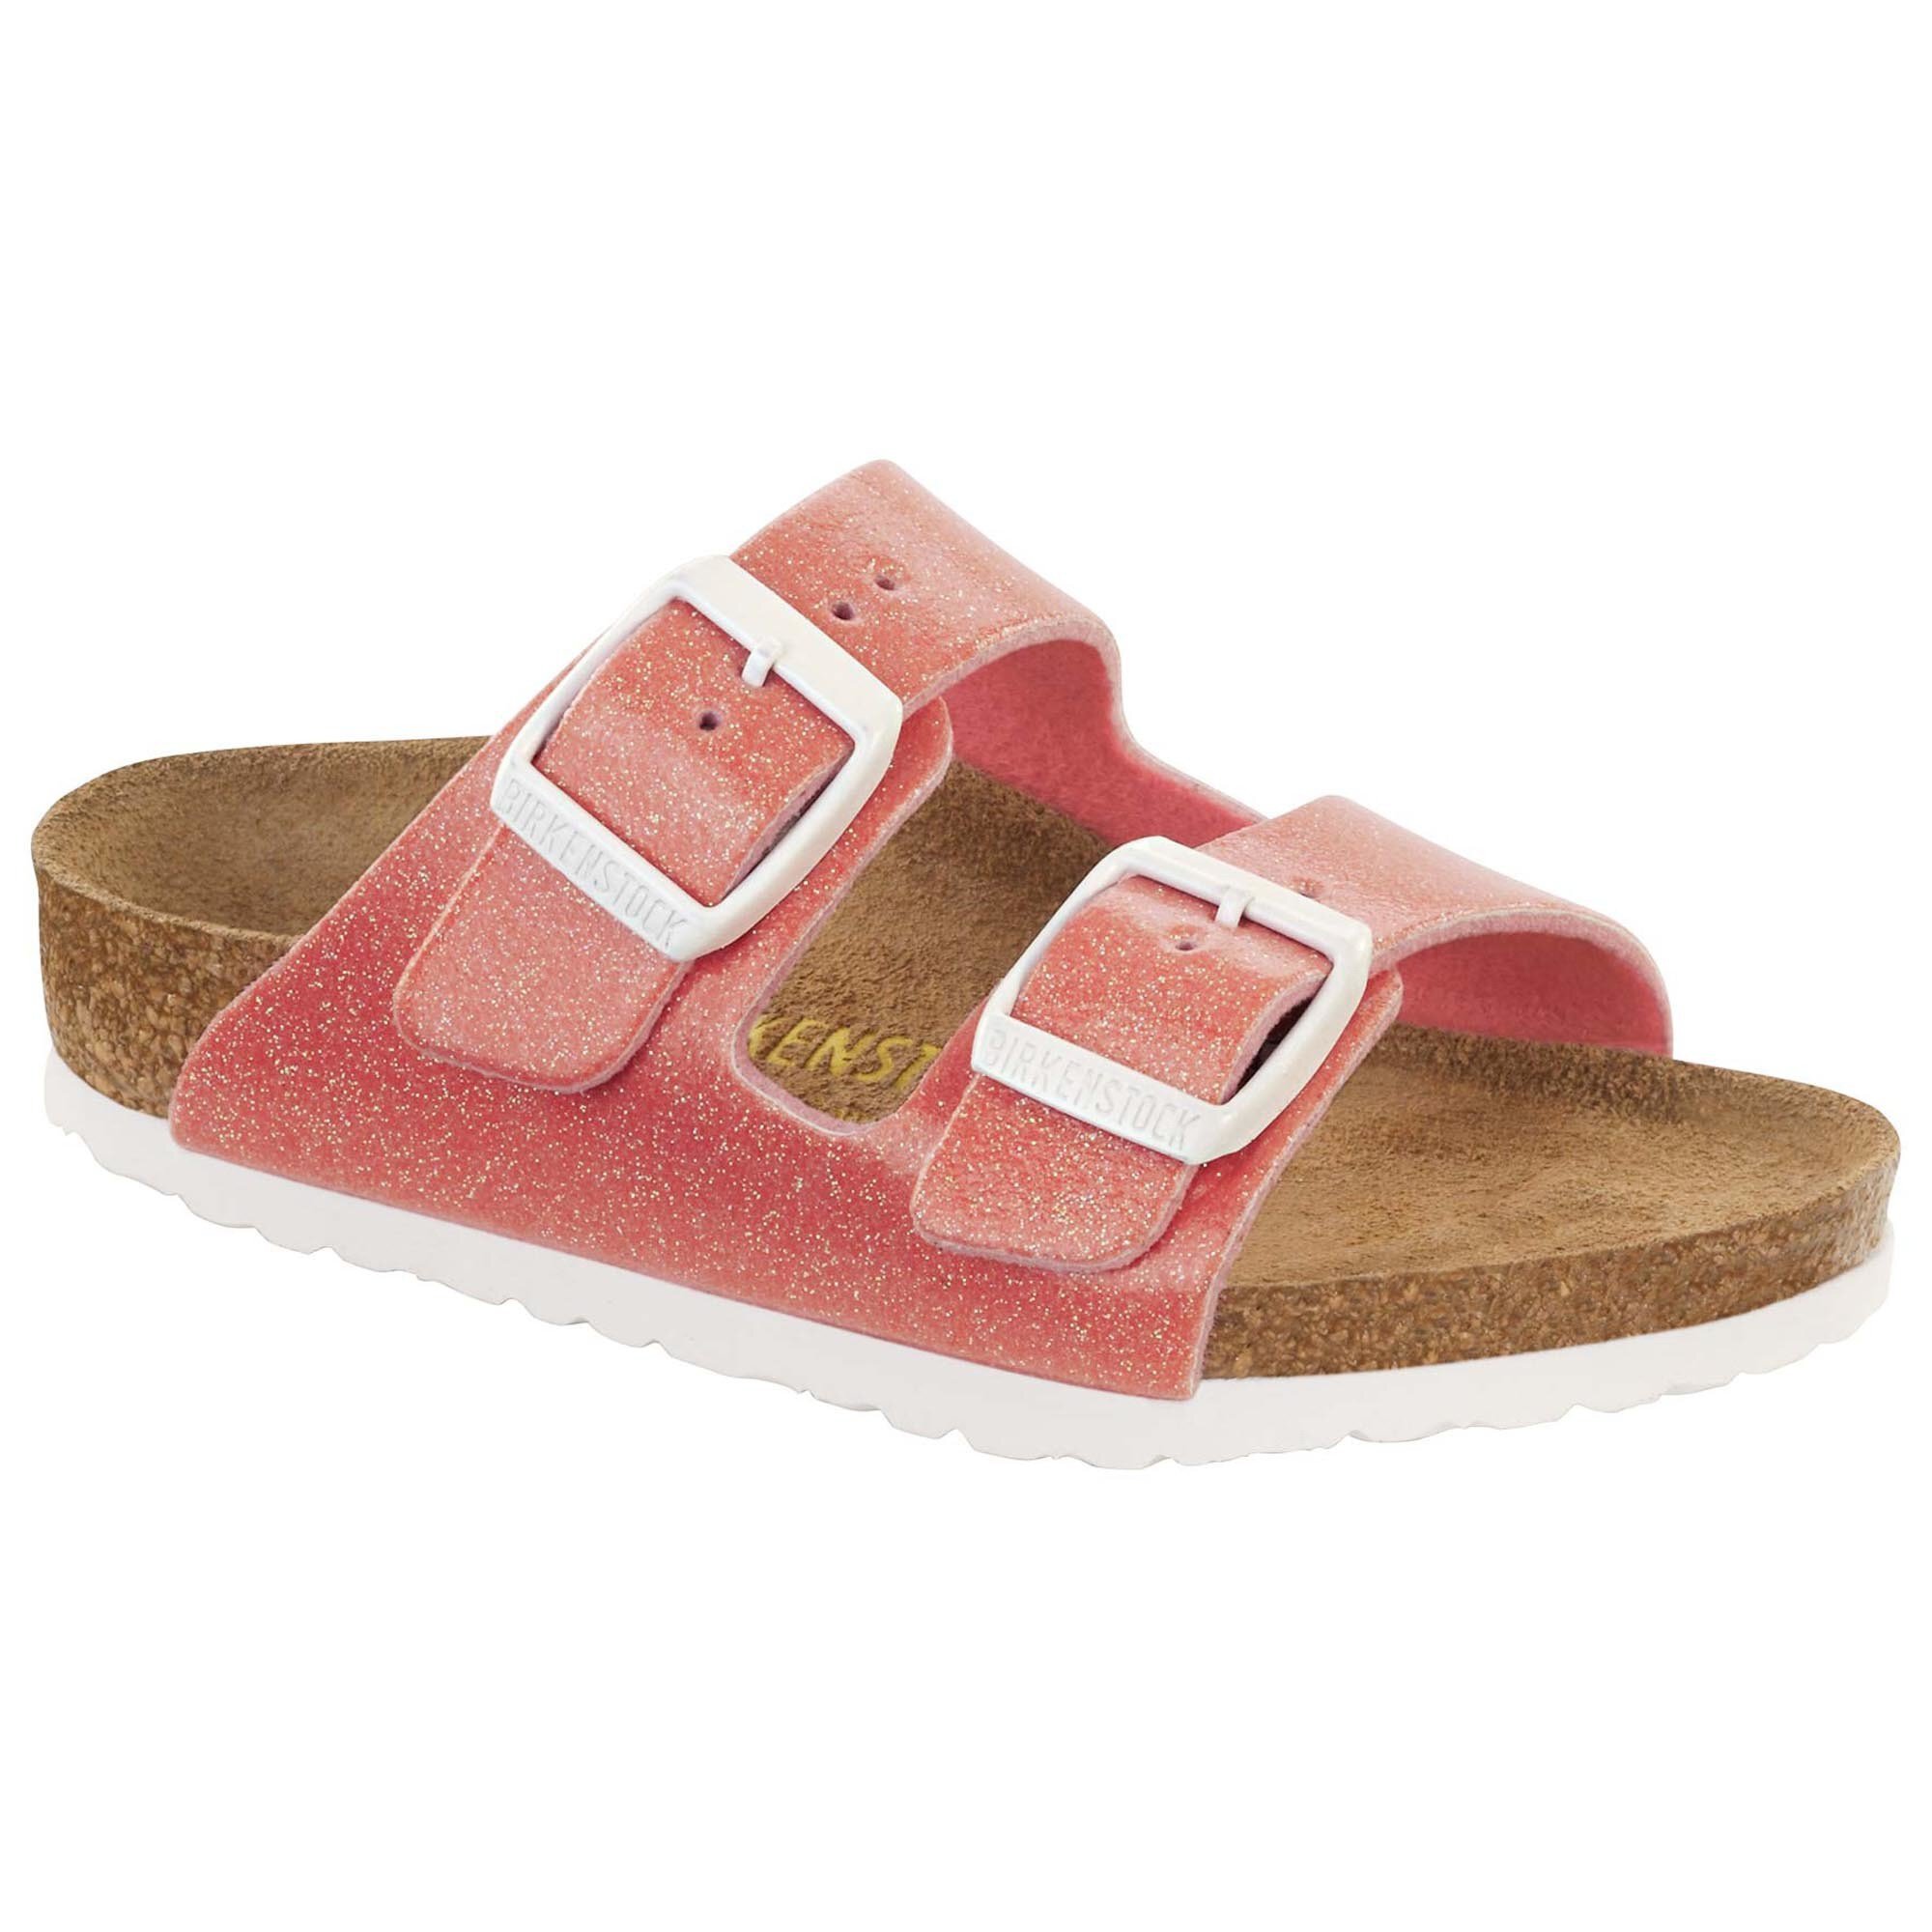 dansko sandals discontinued